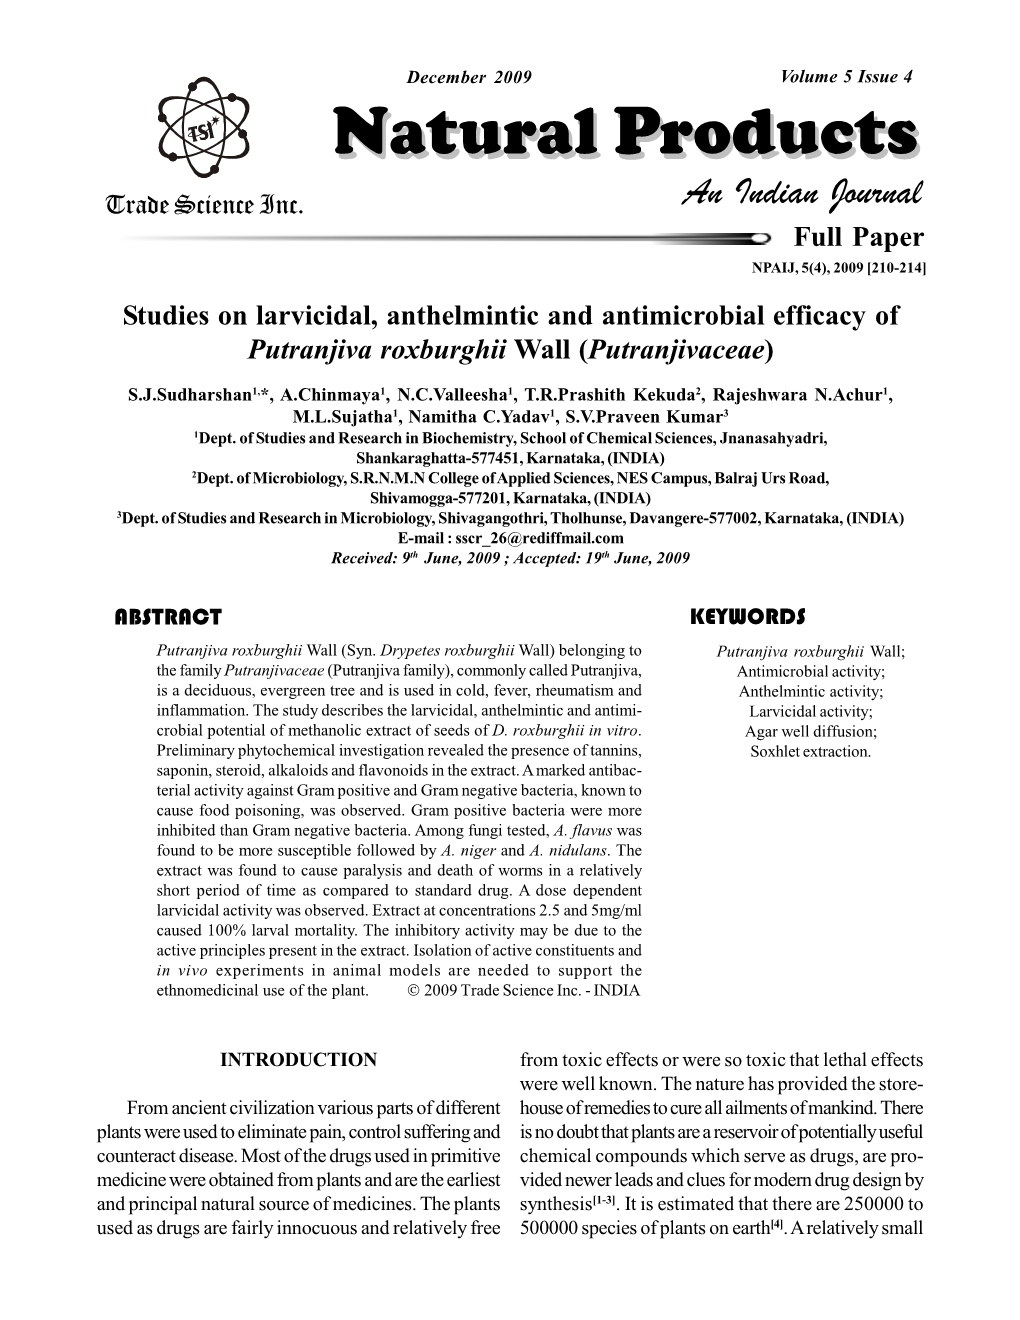 Studies on Larvicidal, Anthelmintic and Antimicrobial Efficacy of Putranjiva Roxburghii Wall (Putranjivaceae)